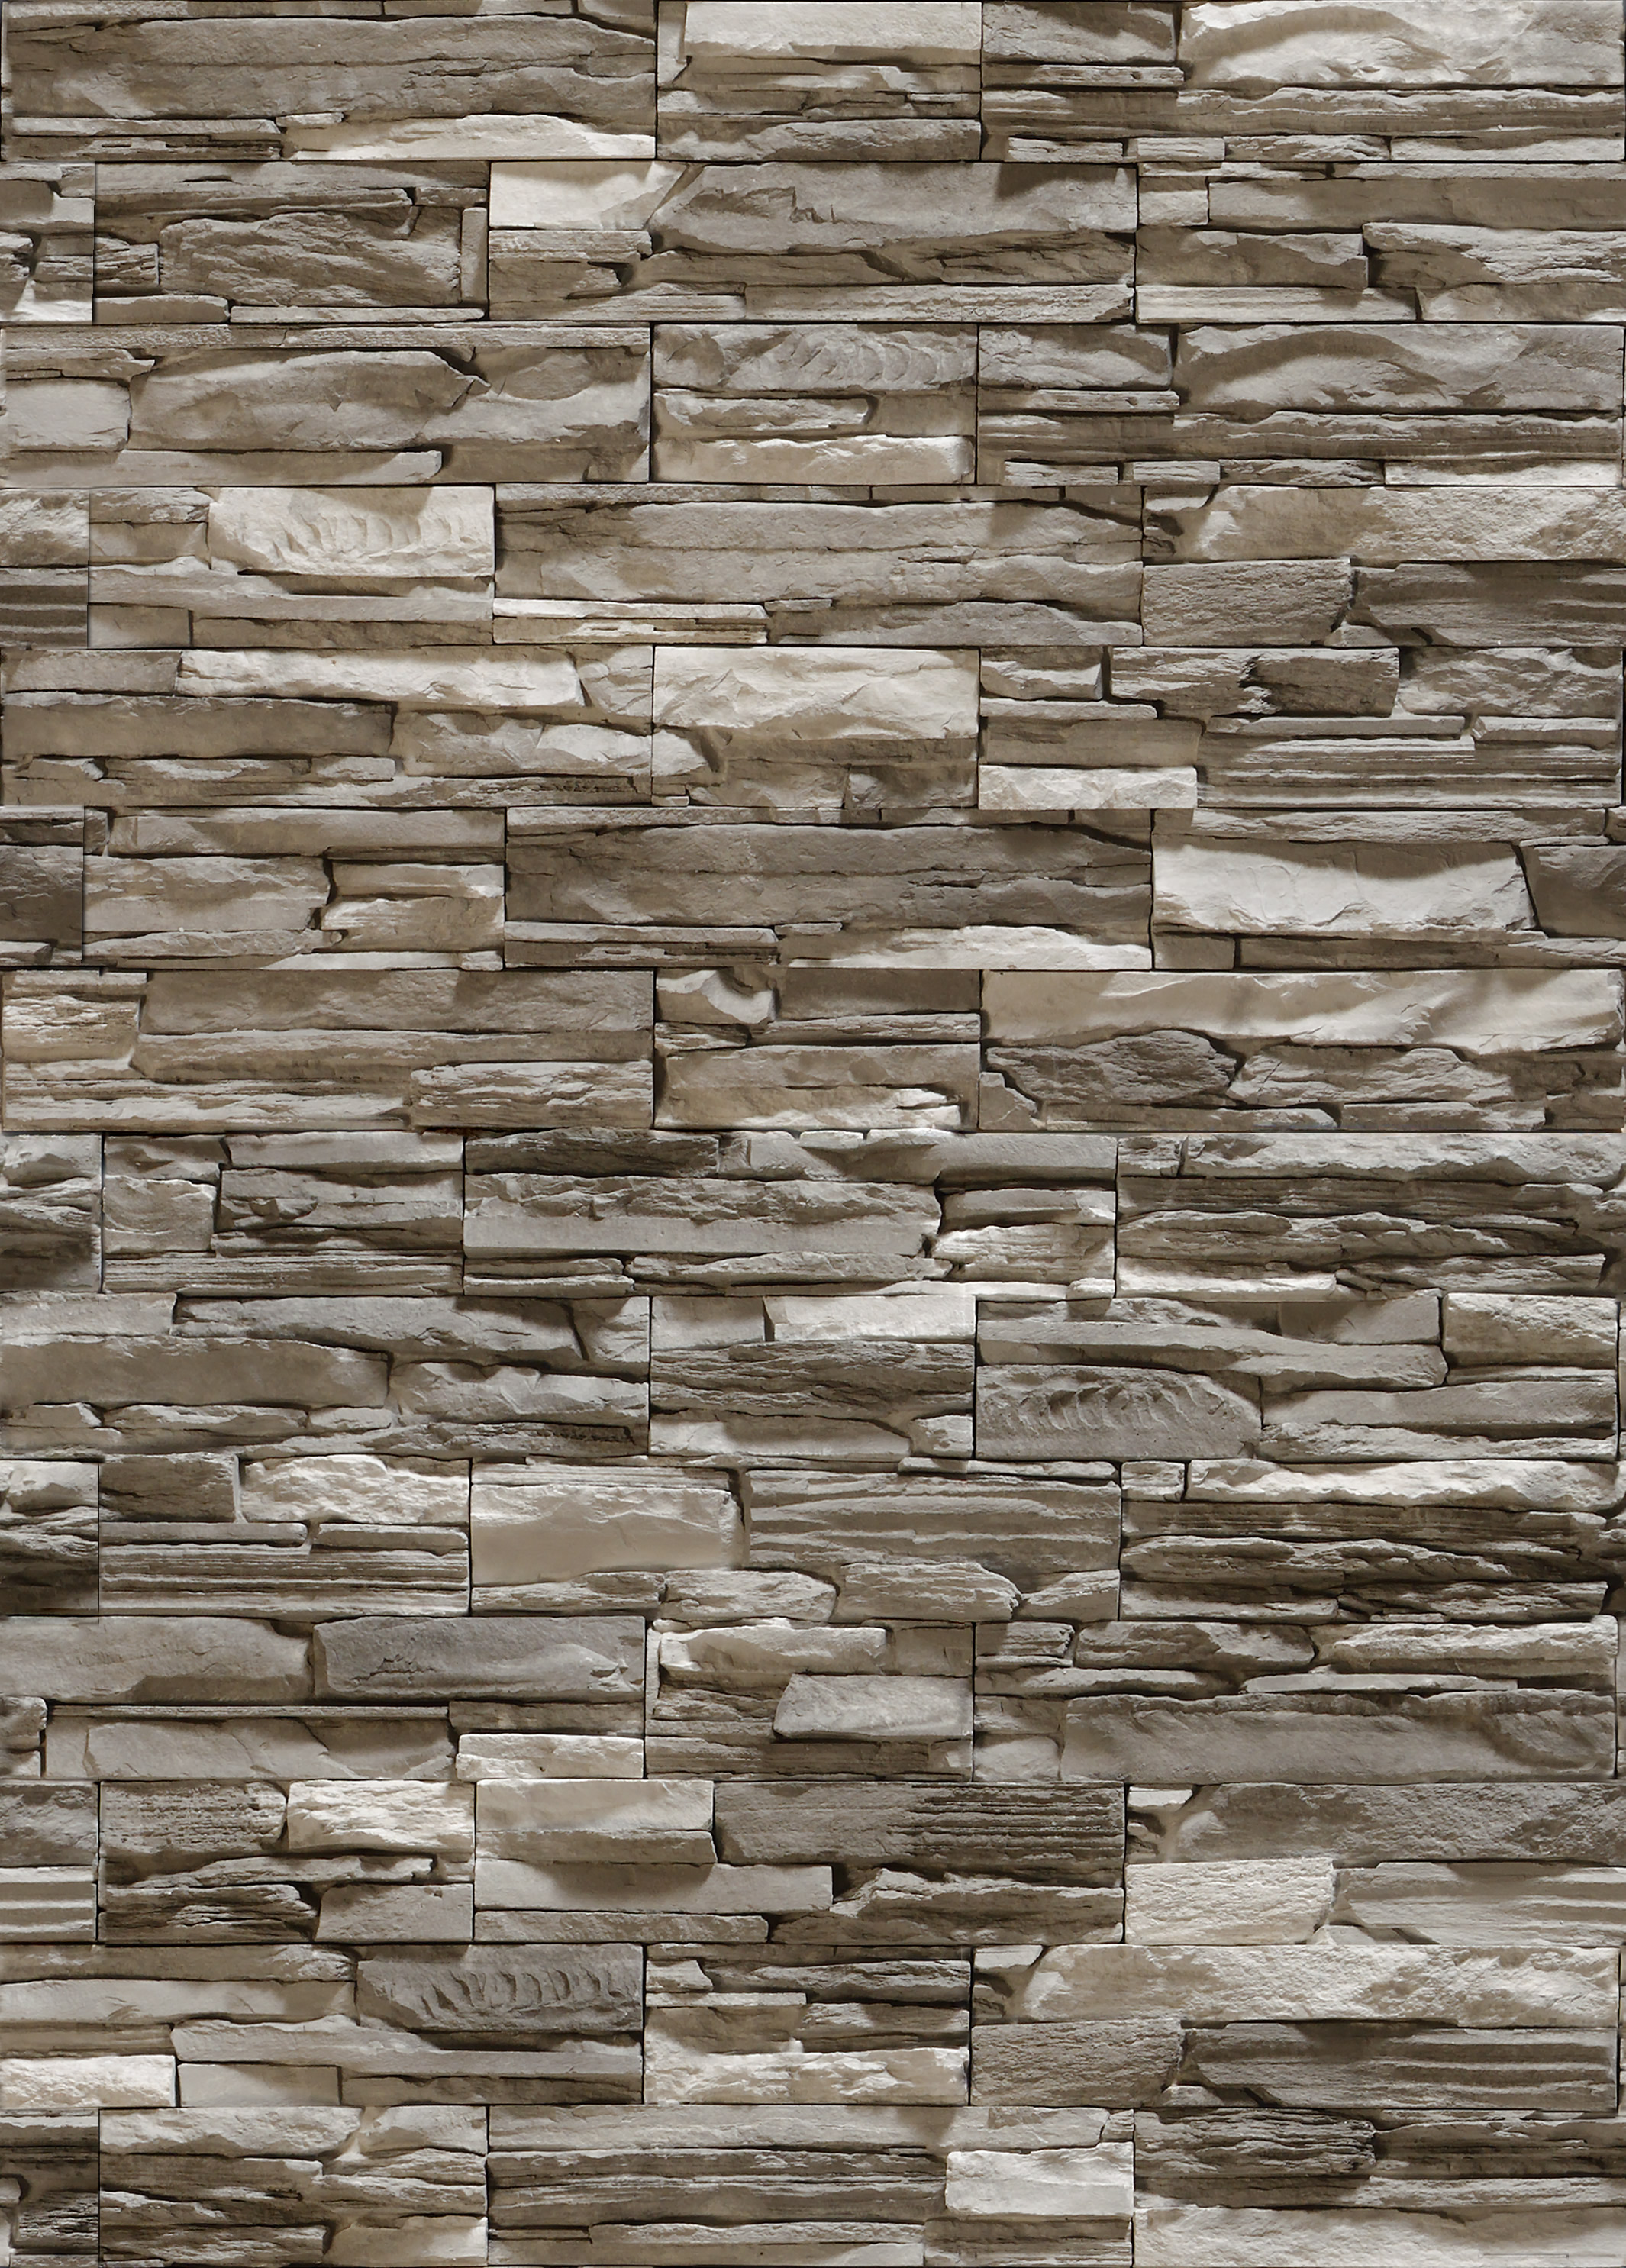 textured stone wallpaper,wall,stone wall,brickwork,brick,wood